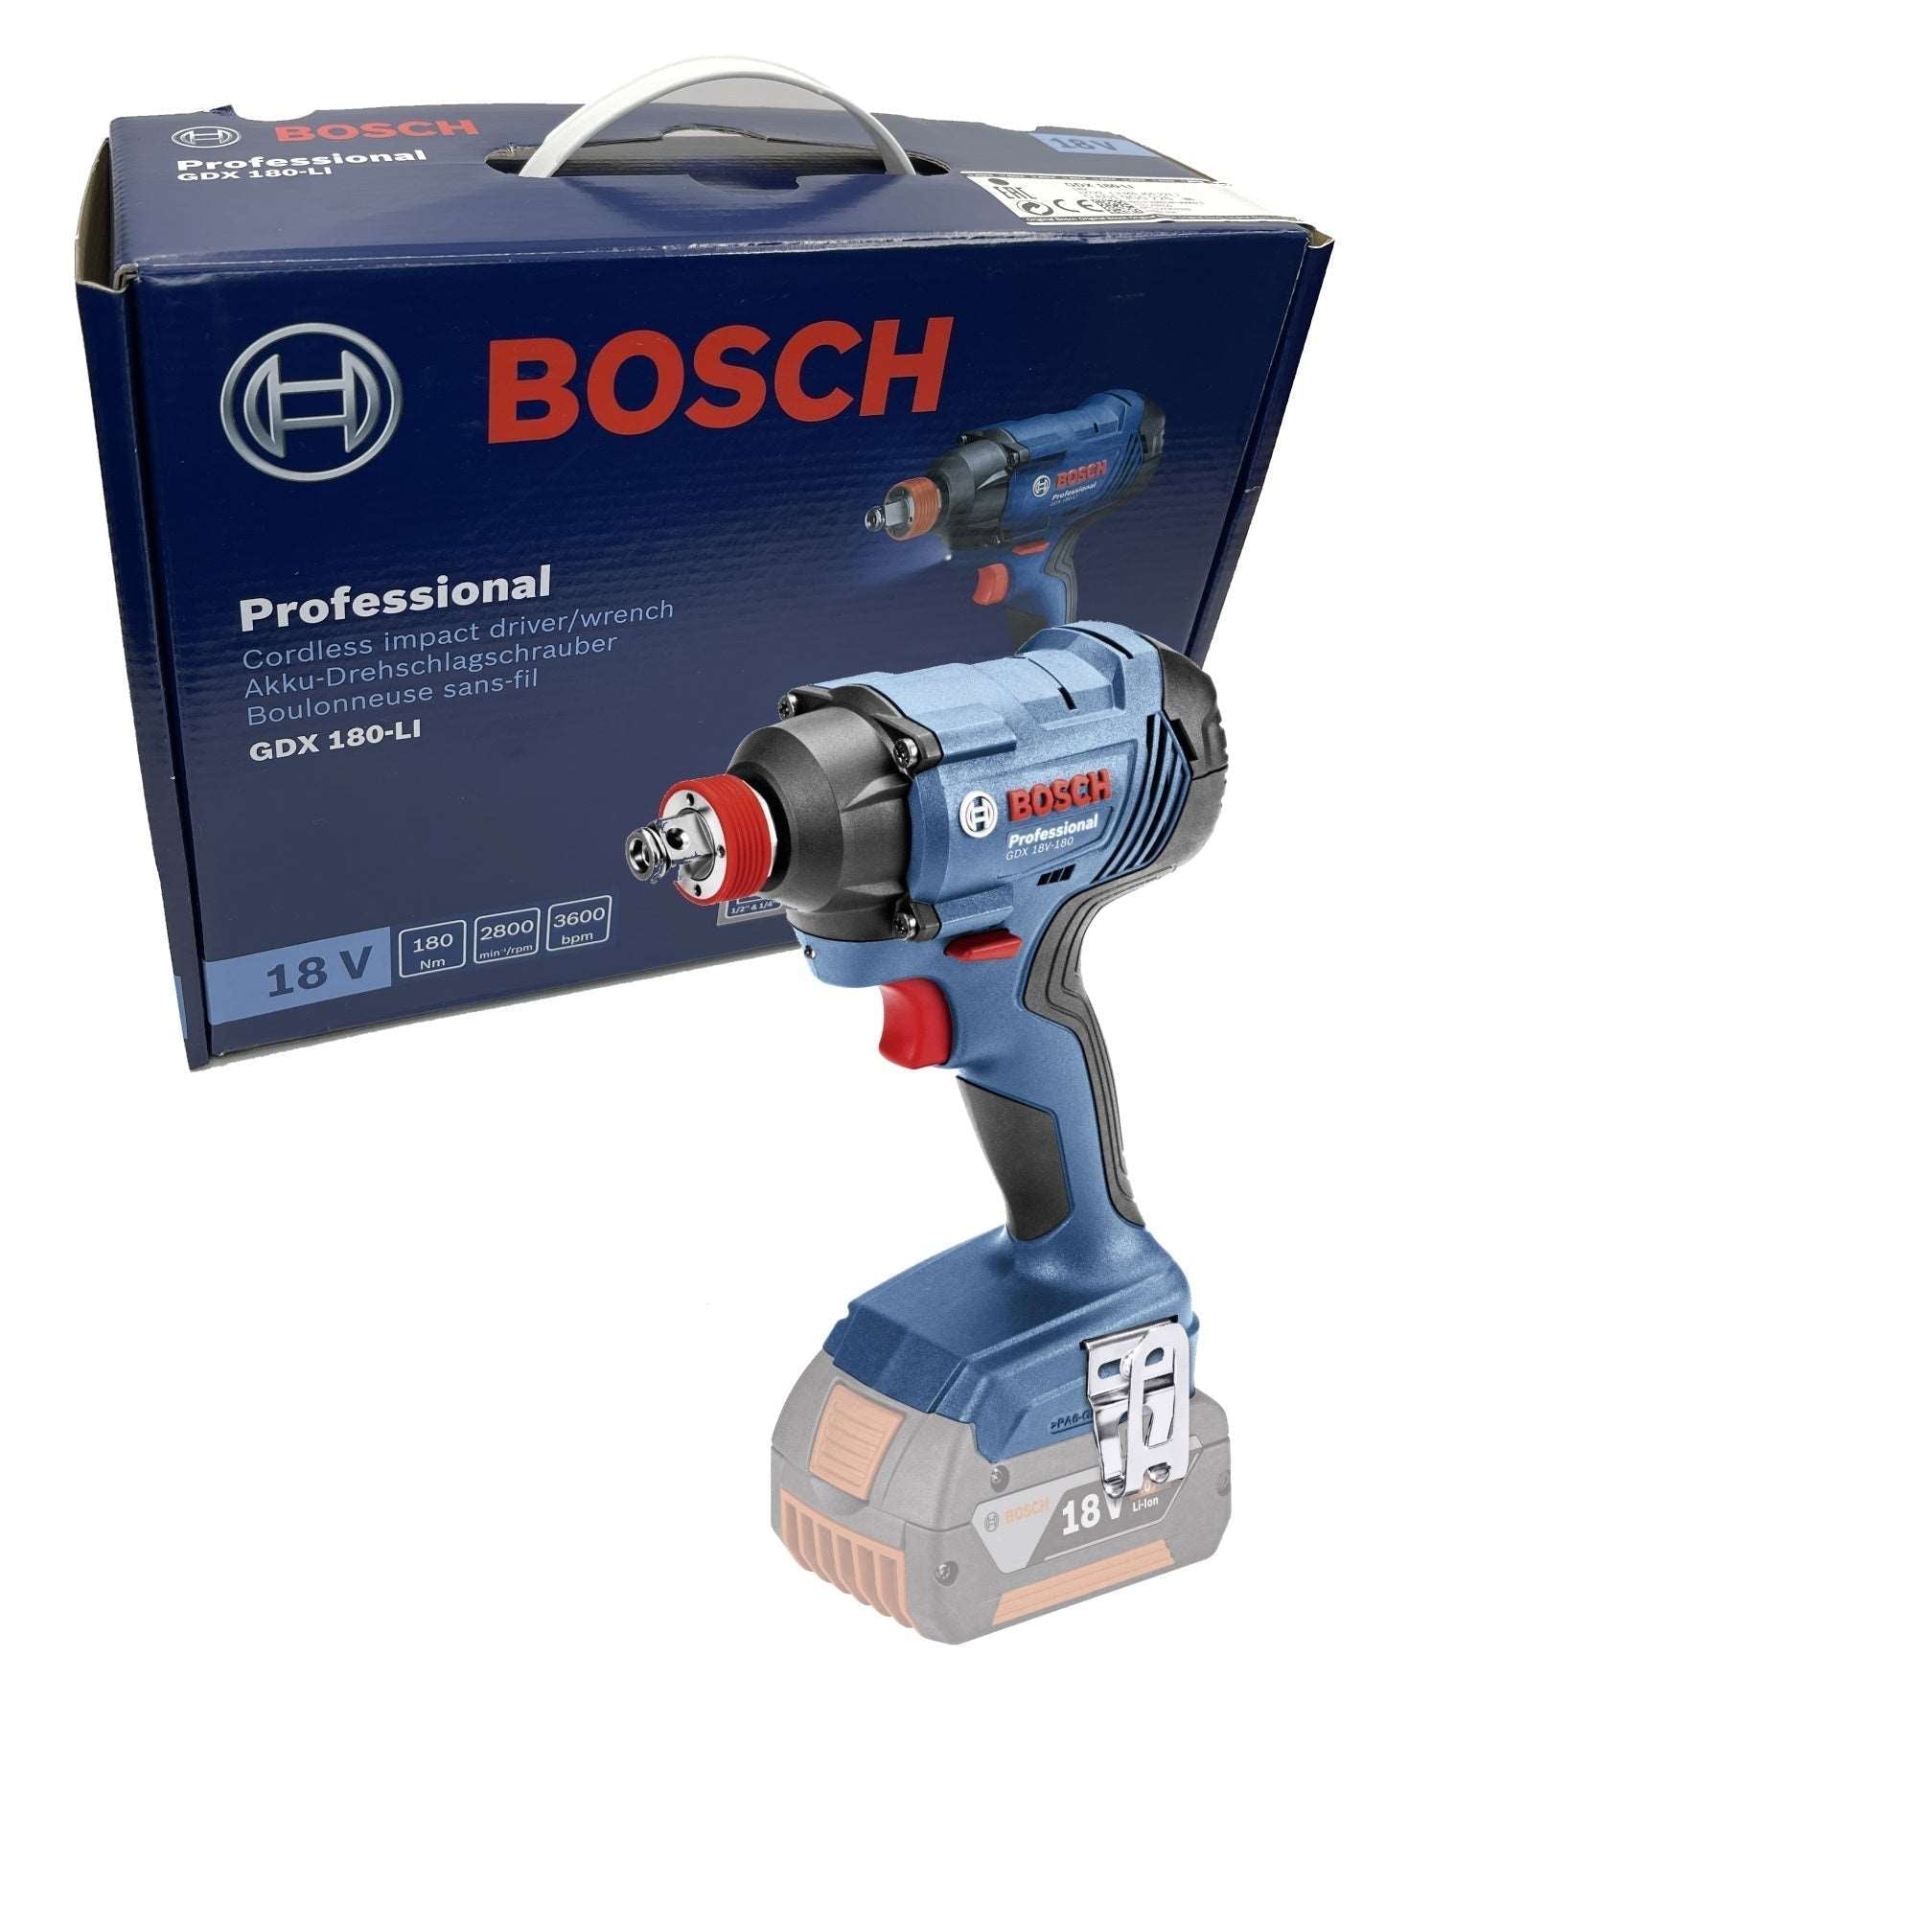 Bosch Professional Cordless Impact Driver GDX 180-LI 06019G5226 Power Tool Services